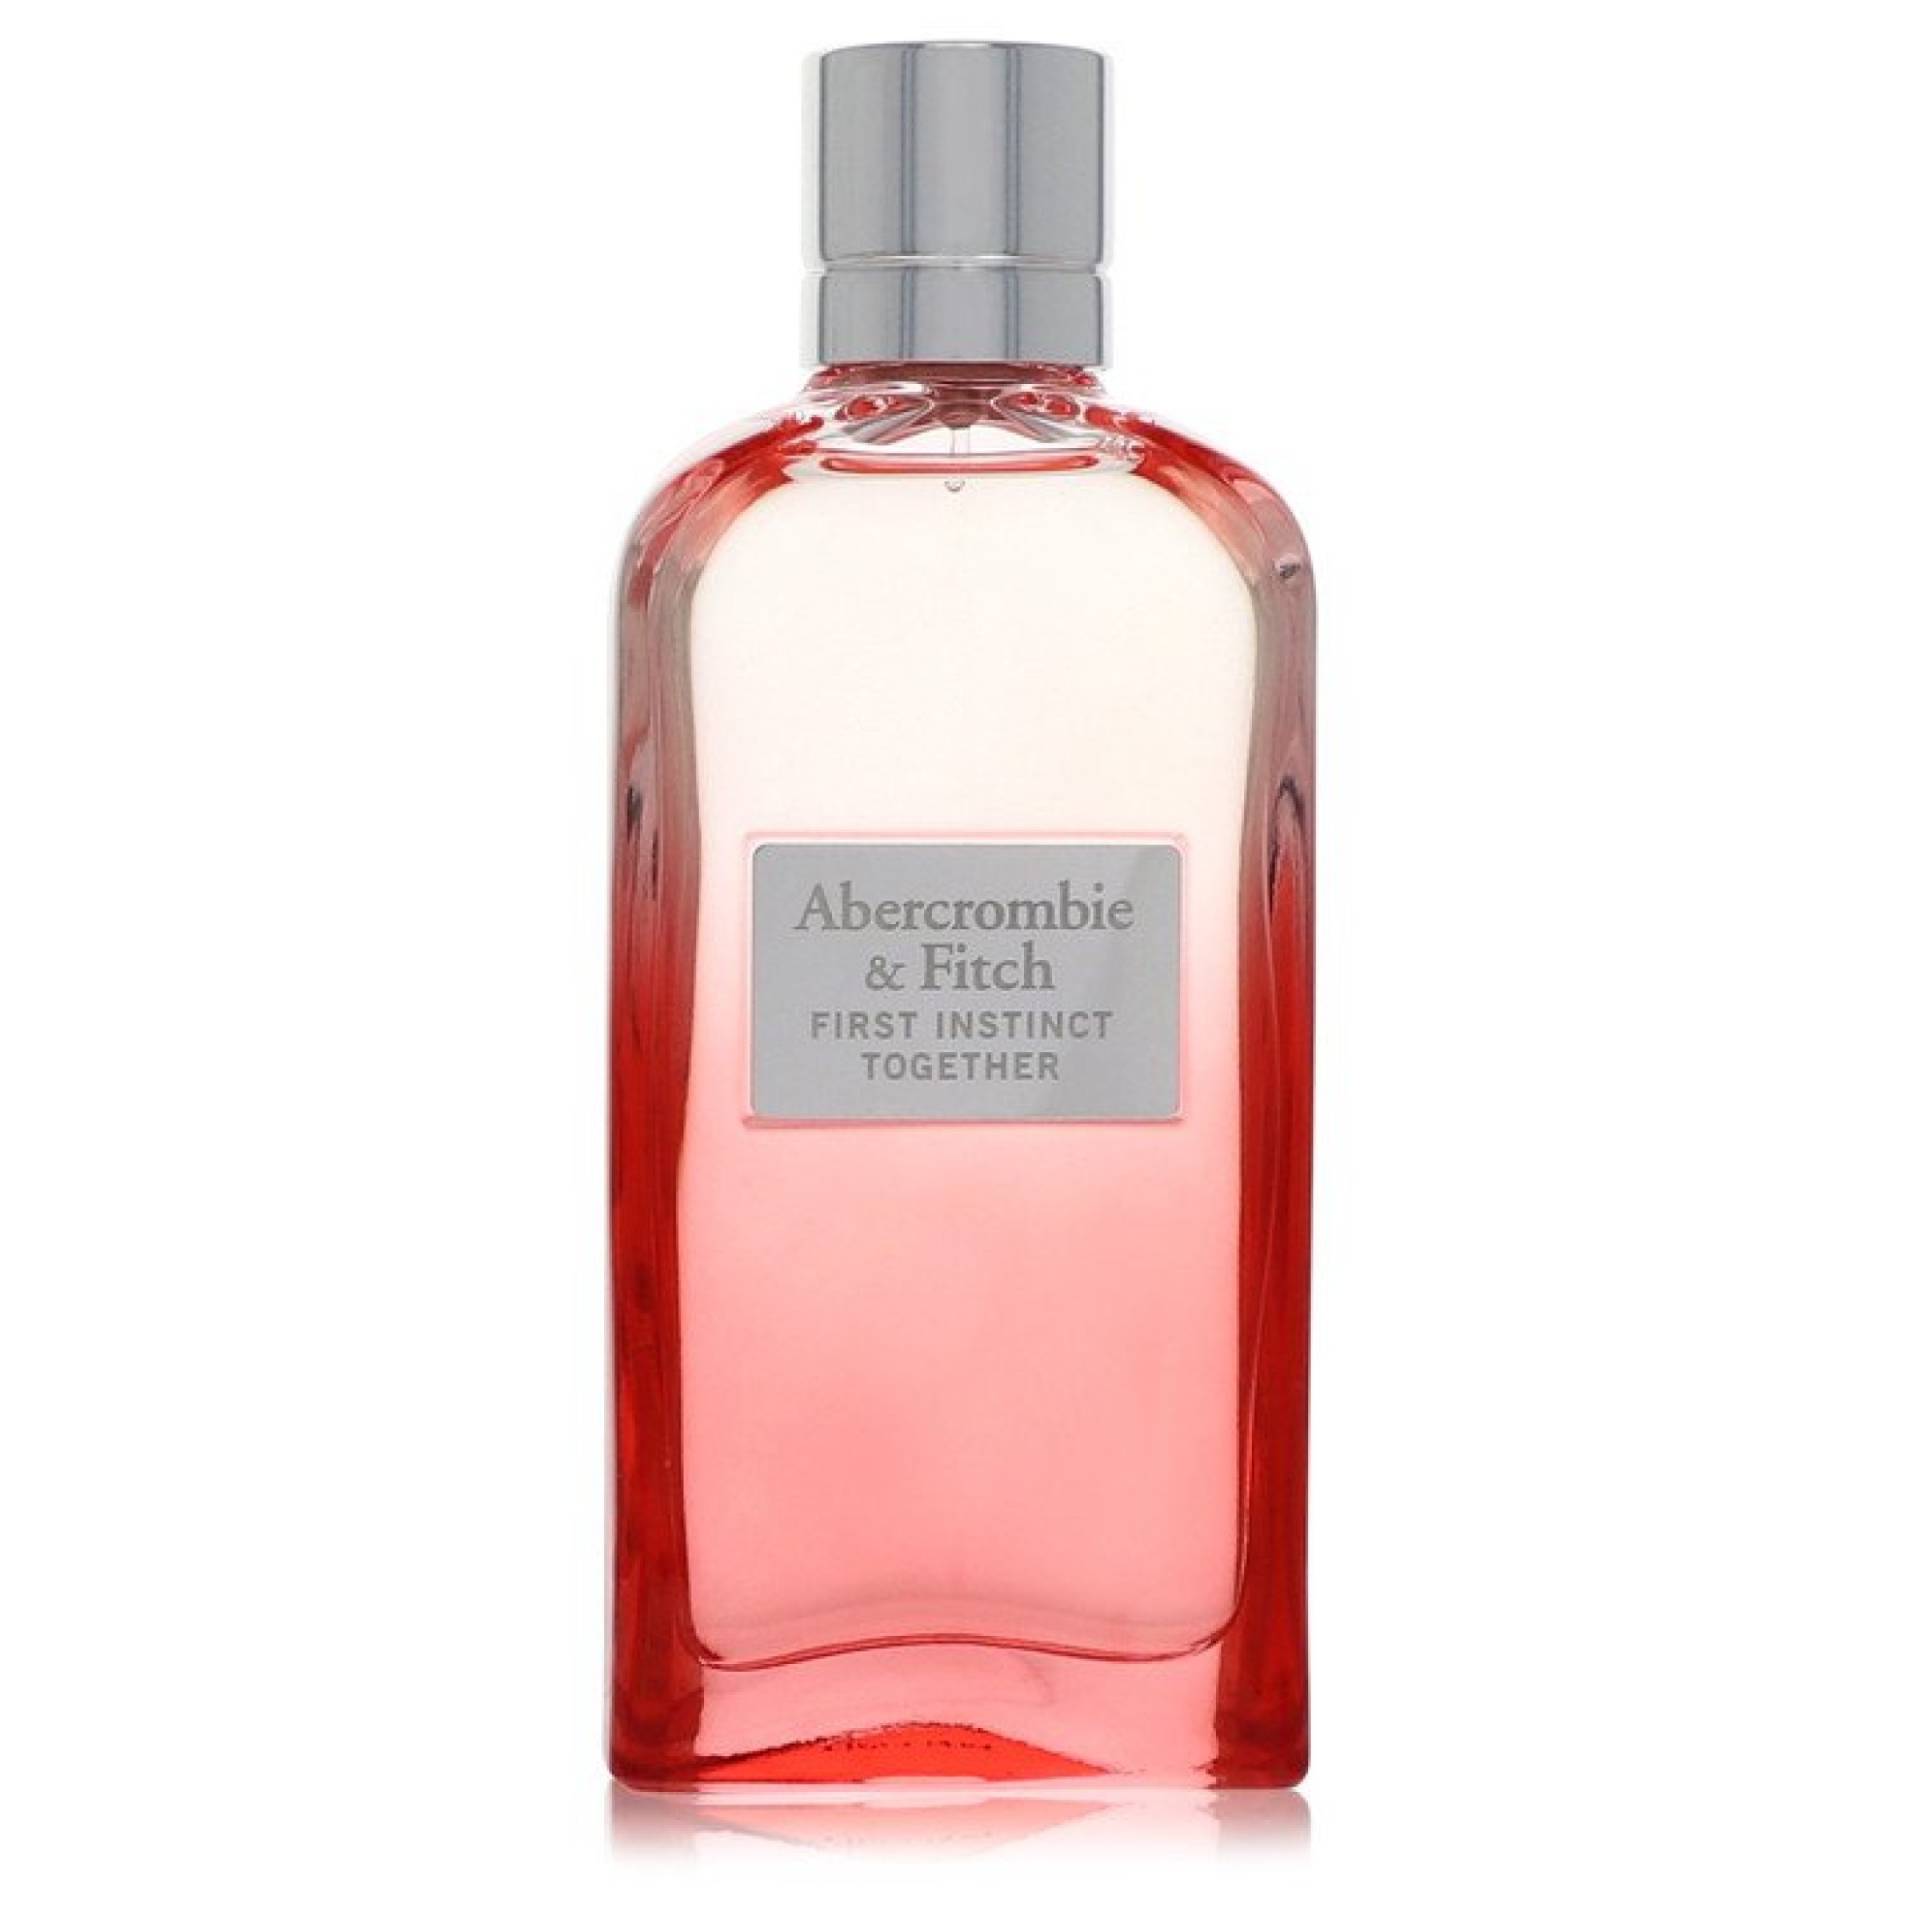 Abercrombie & Fitch First Instinct Together Eau De Parfum Spray (Unboxed) 101 ml von Abercrombie & Fitch